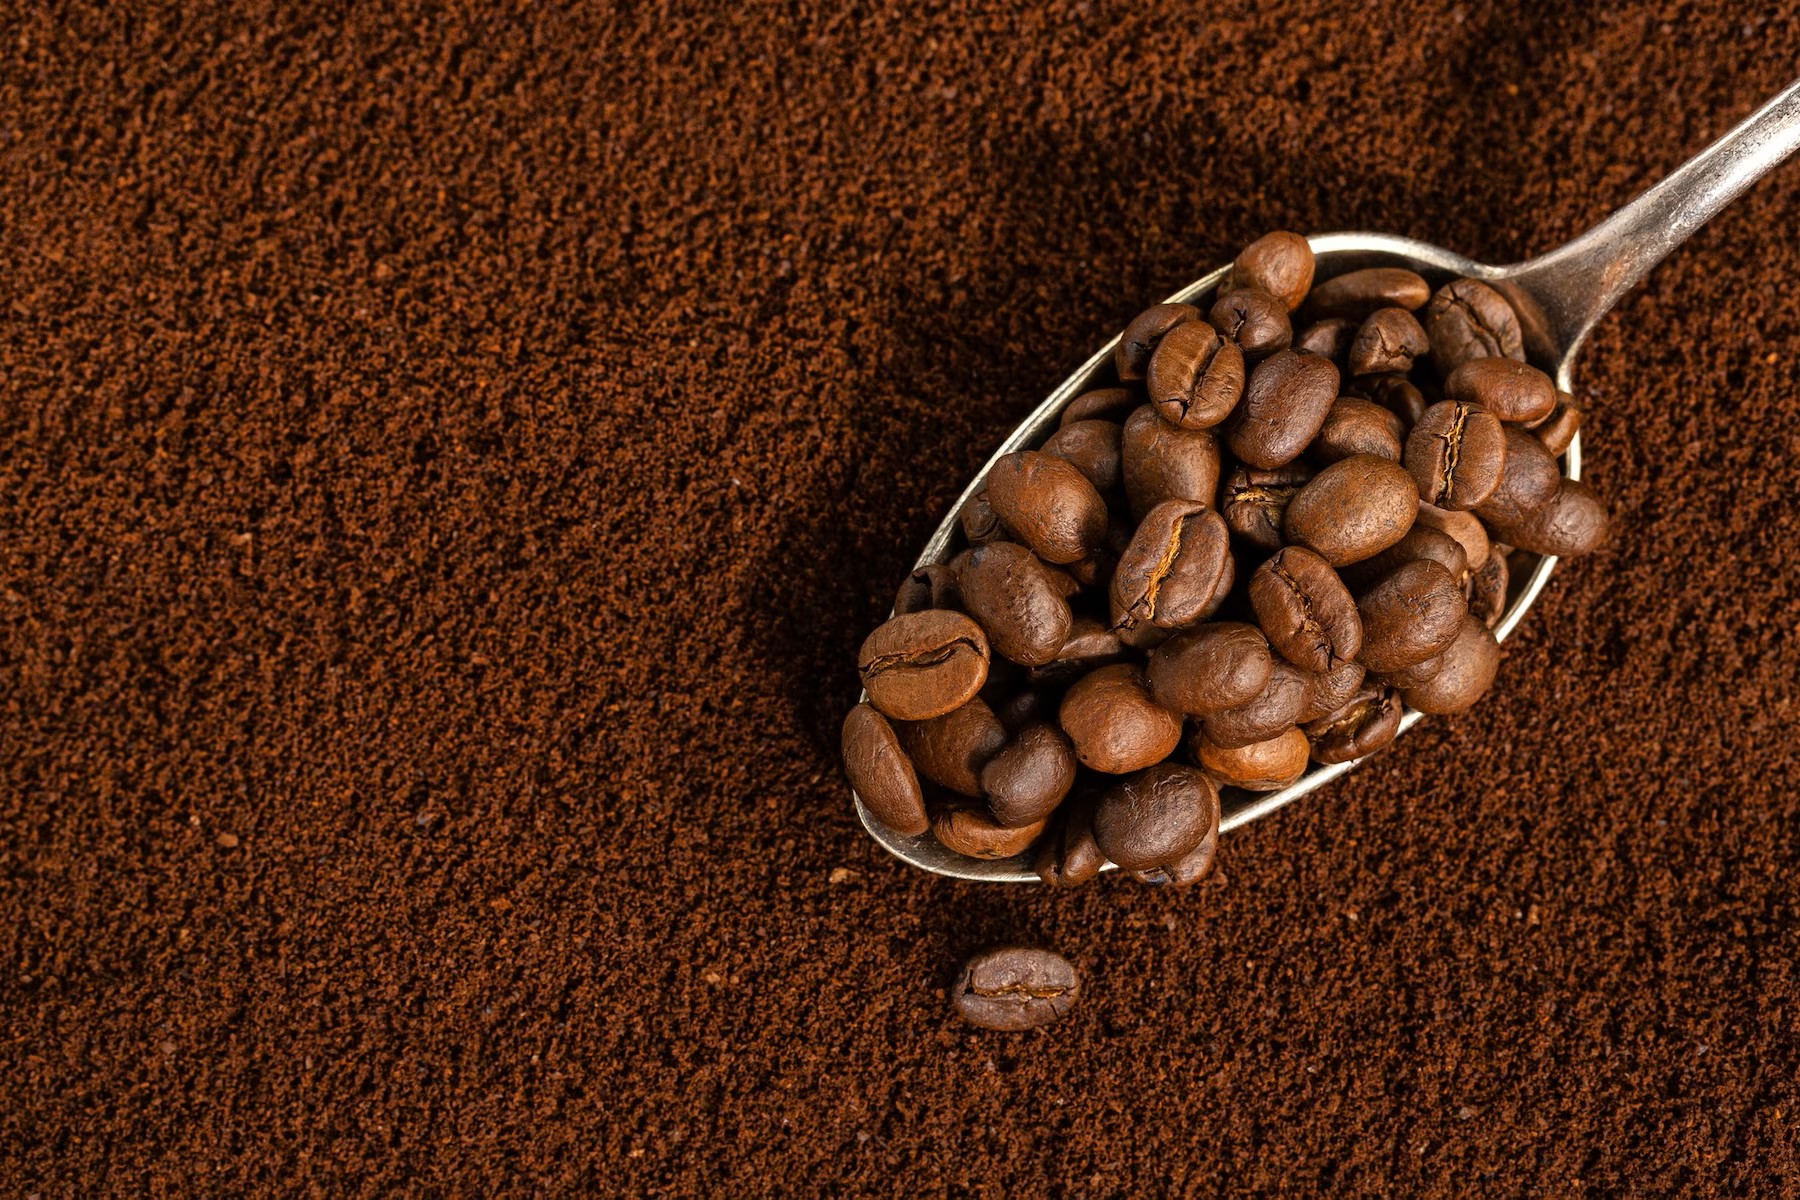 coffee-beans-on-spoon-on-ground-coffee-closeup_1220-6144.jpg